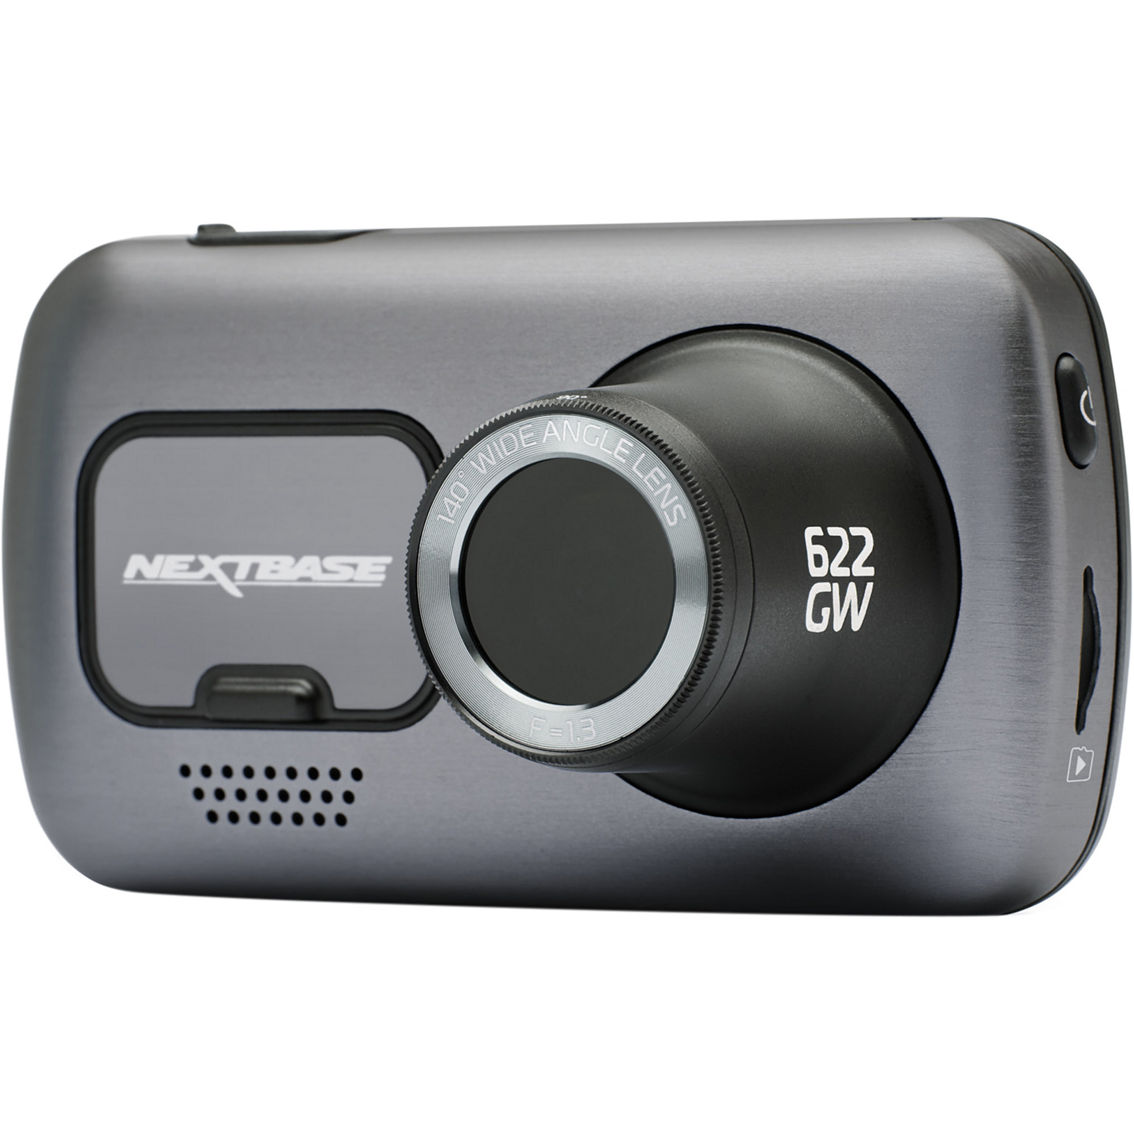 Nextbase 622GW Dash Cam - Image 3 of 10